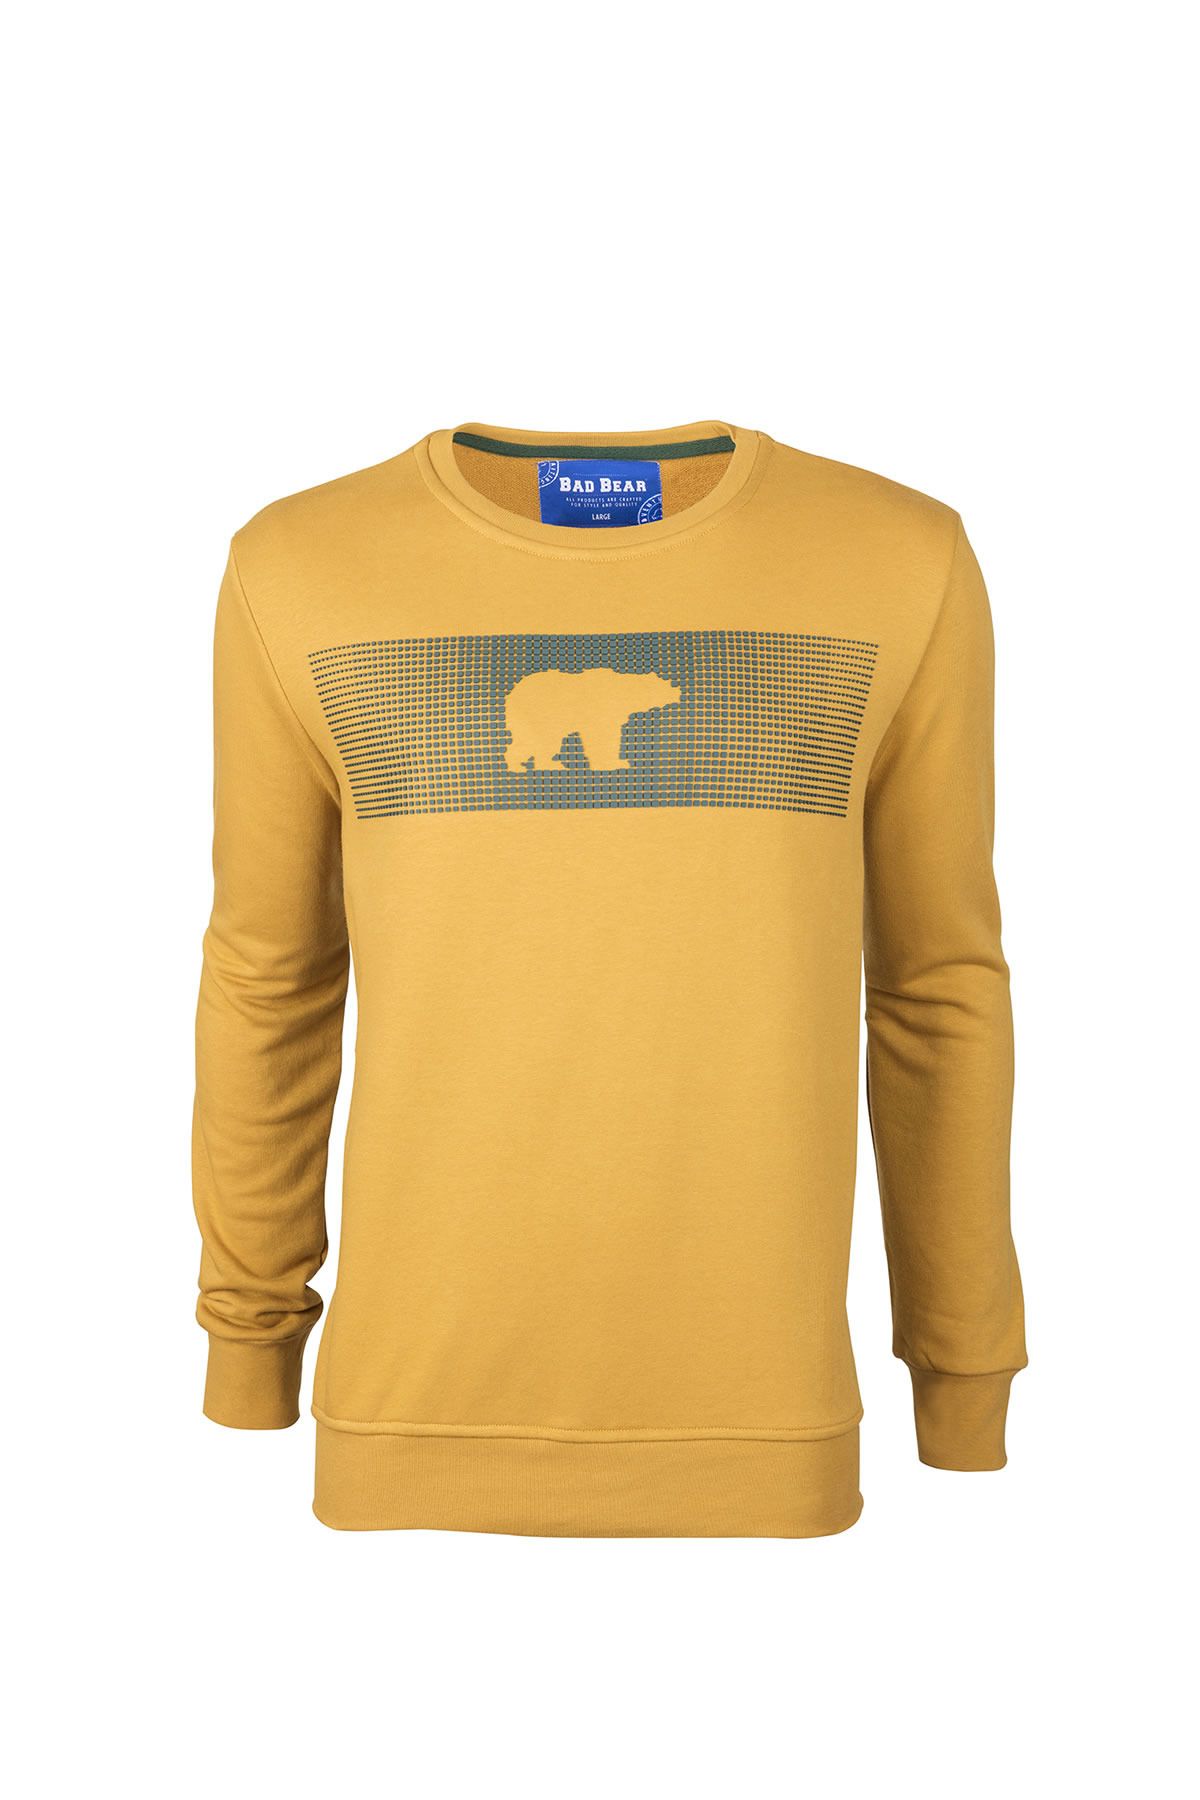 Bad Bear Fancy Crewneck Erkek Sweatshirt 19.02.12.007-c26